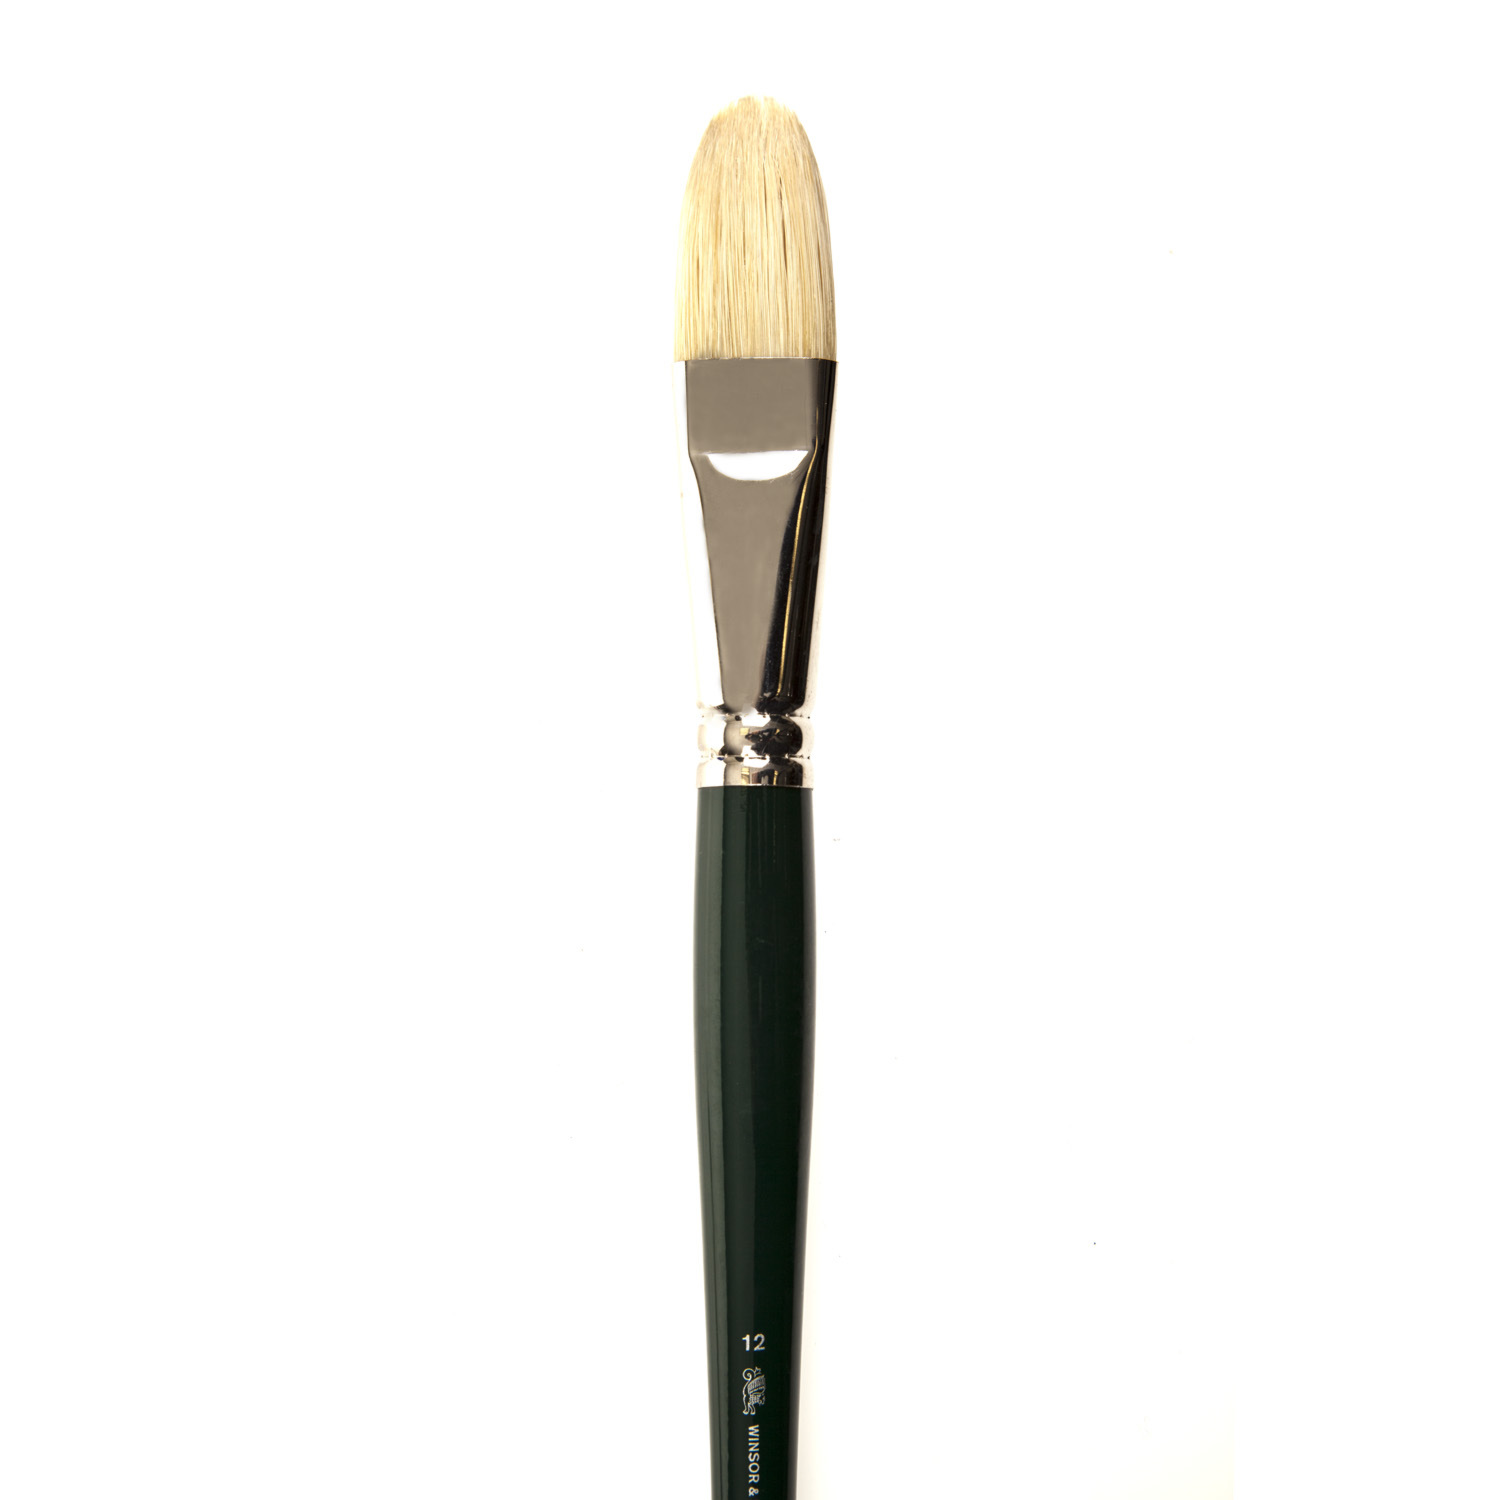 Winsor and Newton Filbert Long Handle Brush - Green / No. 12 Image 1